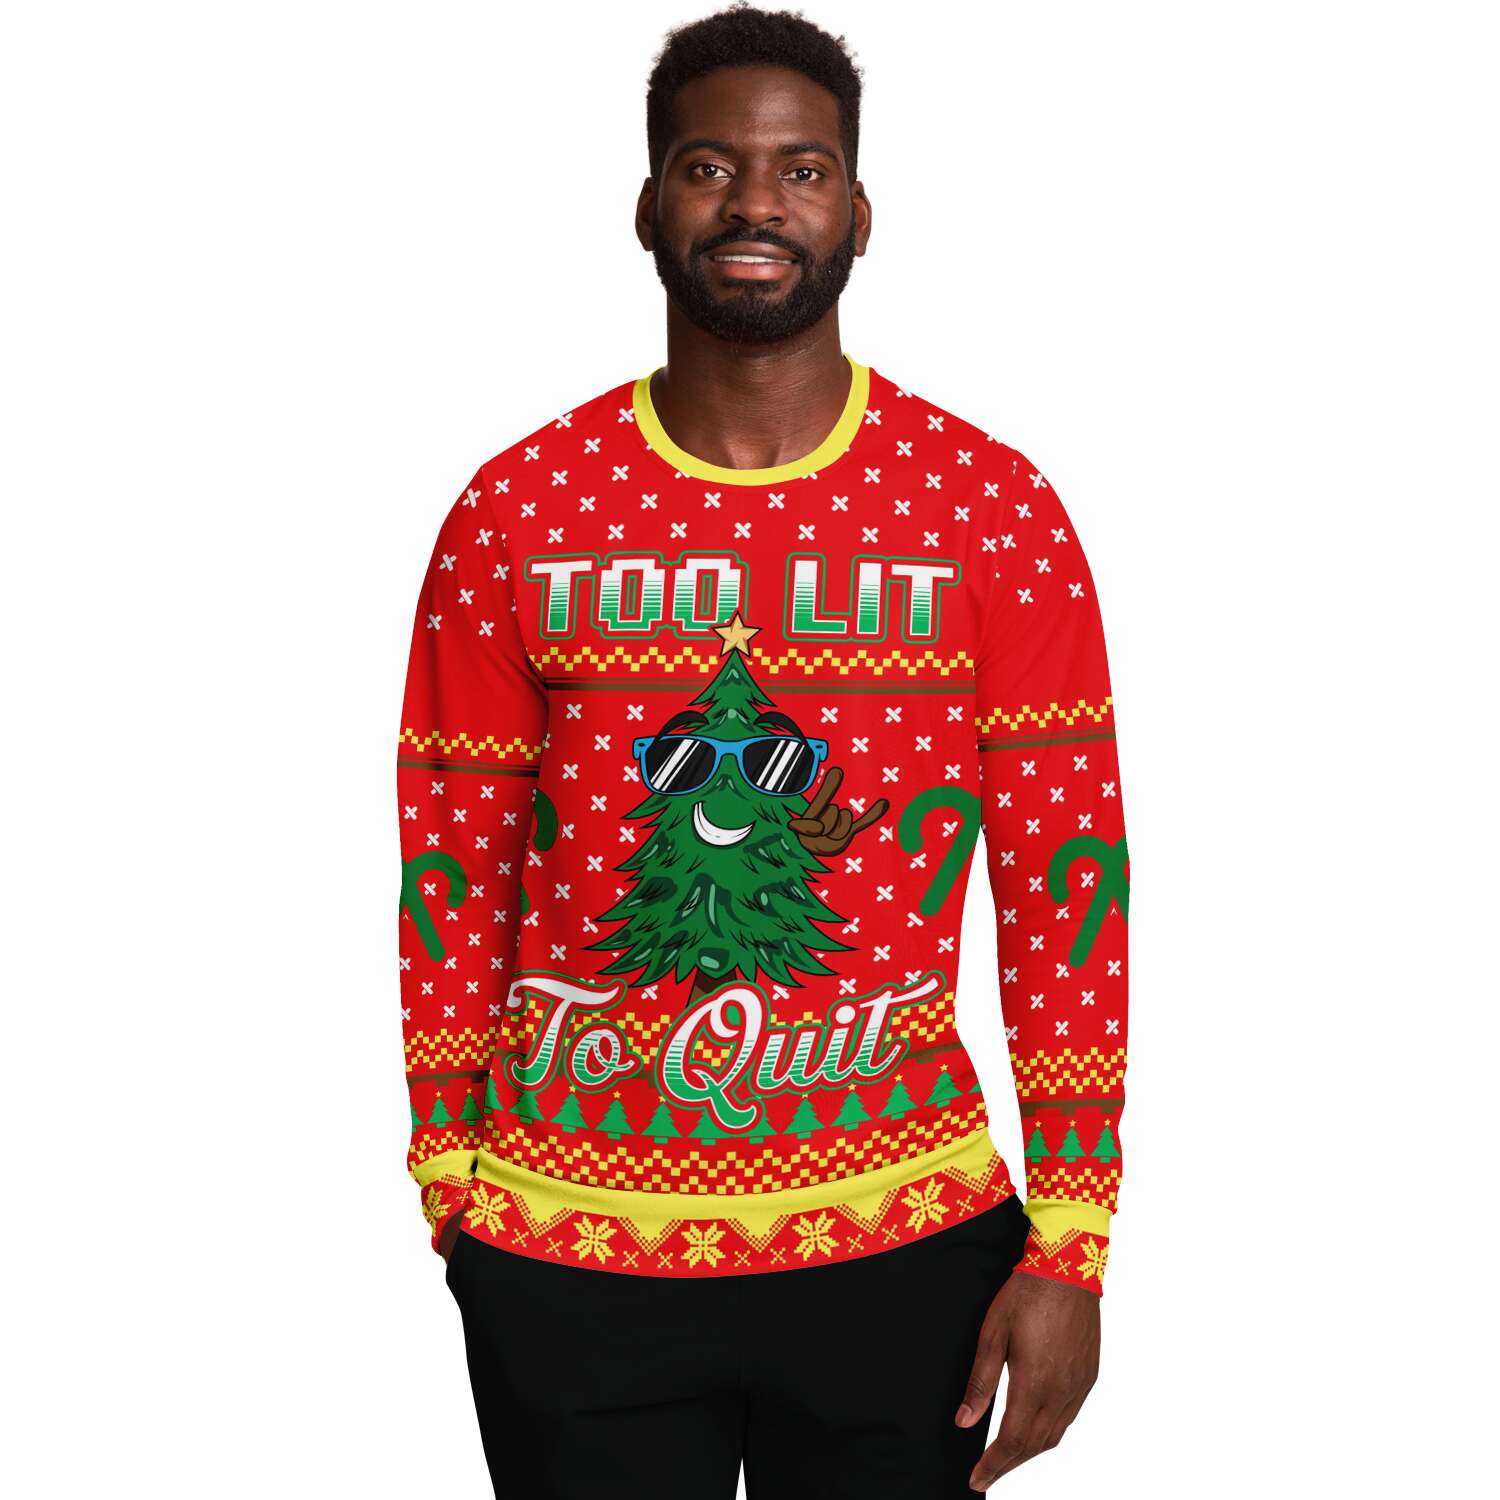 Too Lit To Quit Sweatshirt | Unisex Ugly Christmas Sweater, Xmas Sweater, Holiday Sweater, Festive Sweater, Funny Sweater, Funny Party Shirt